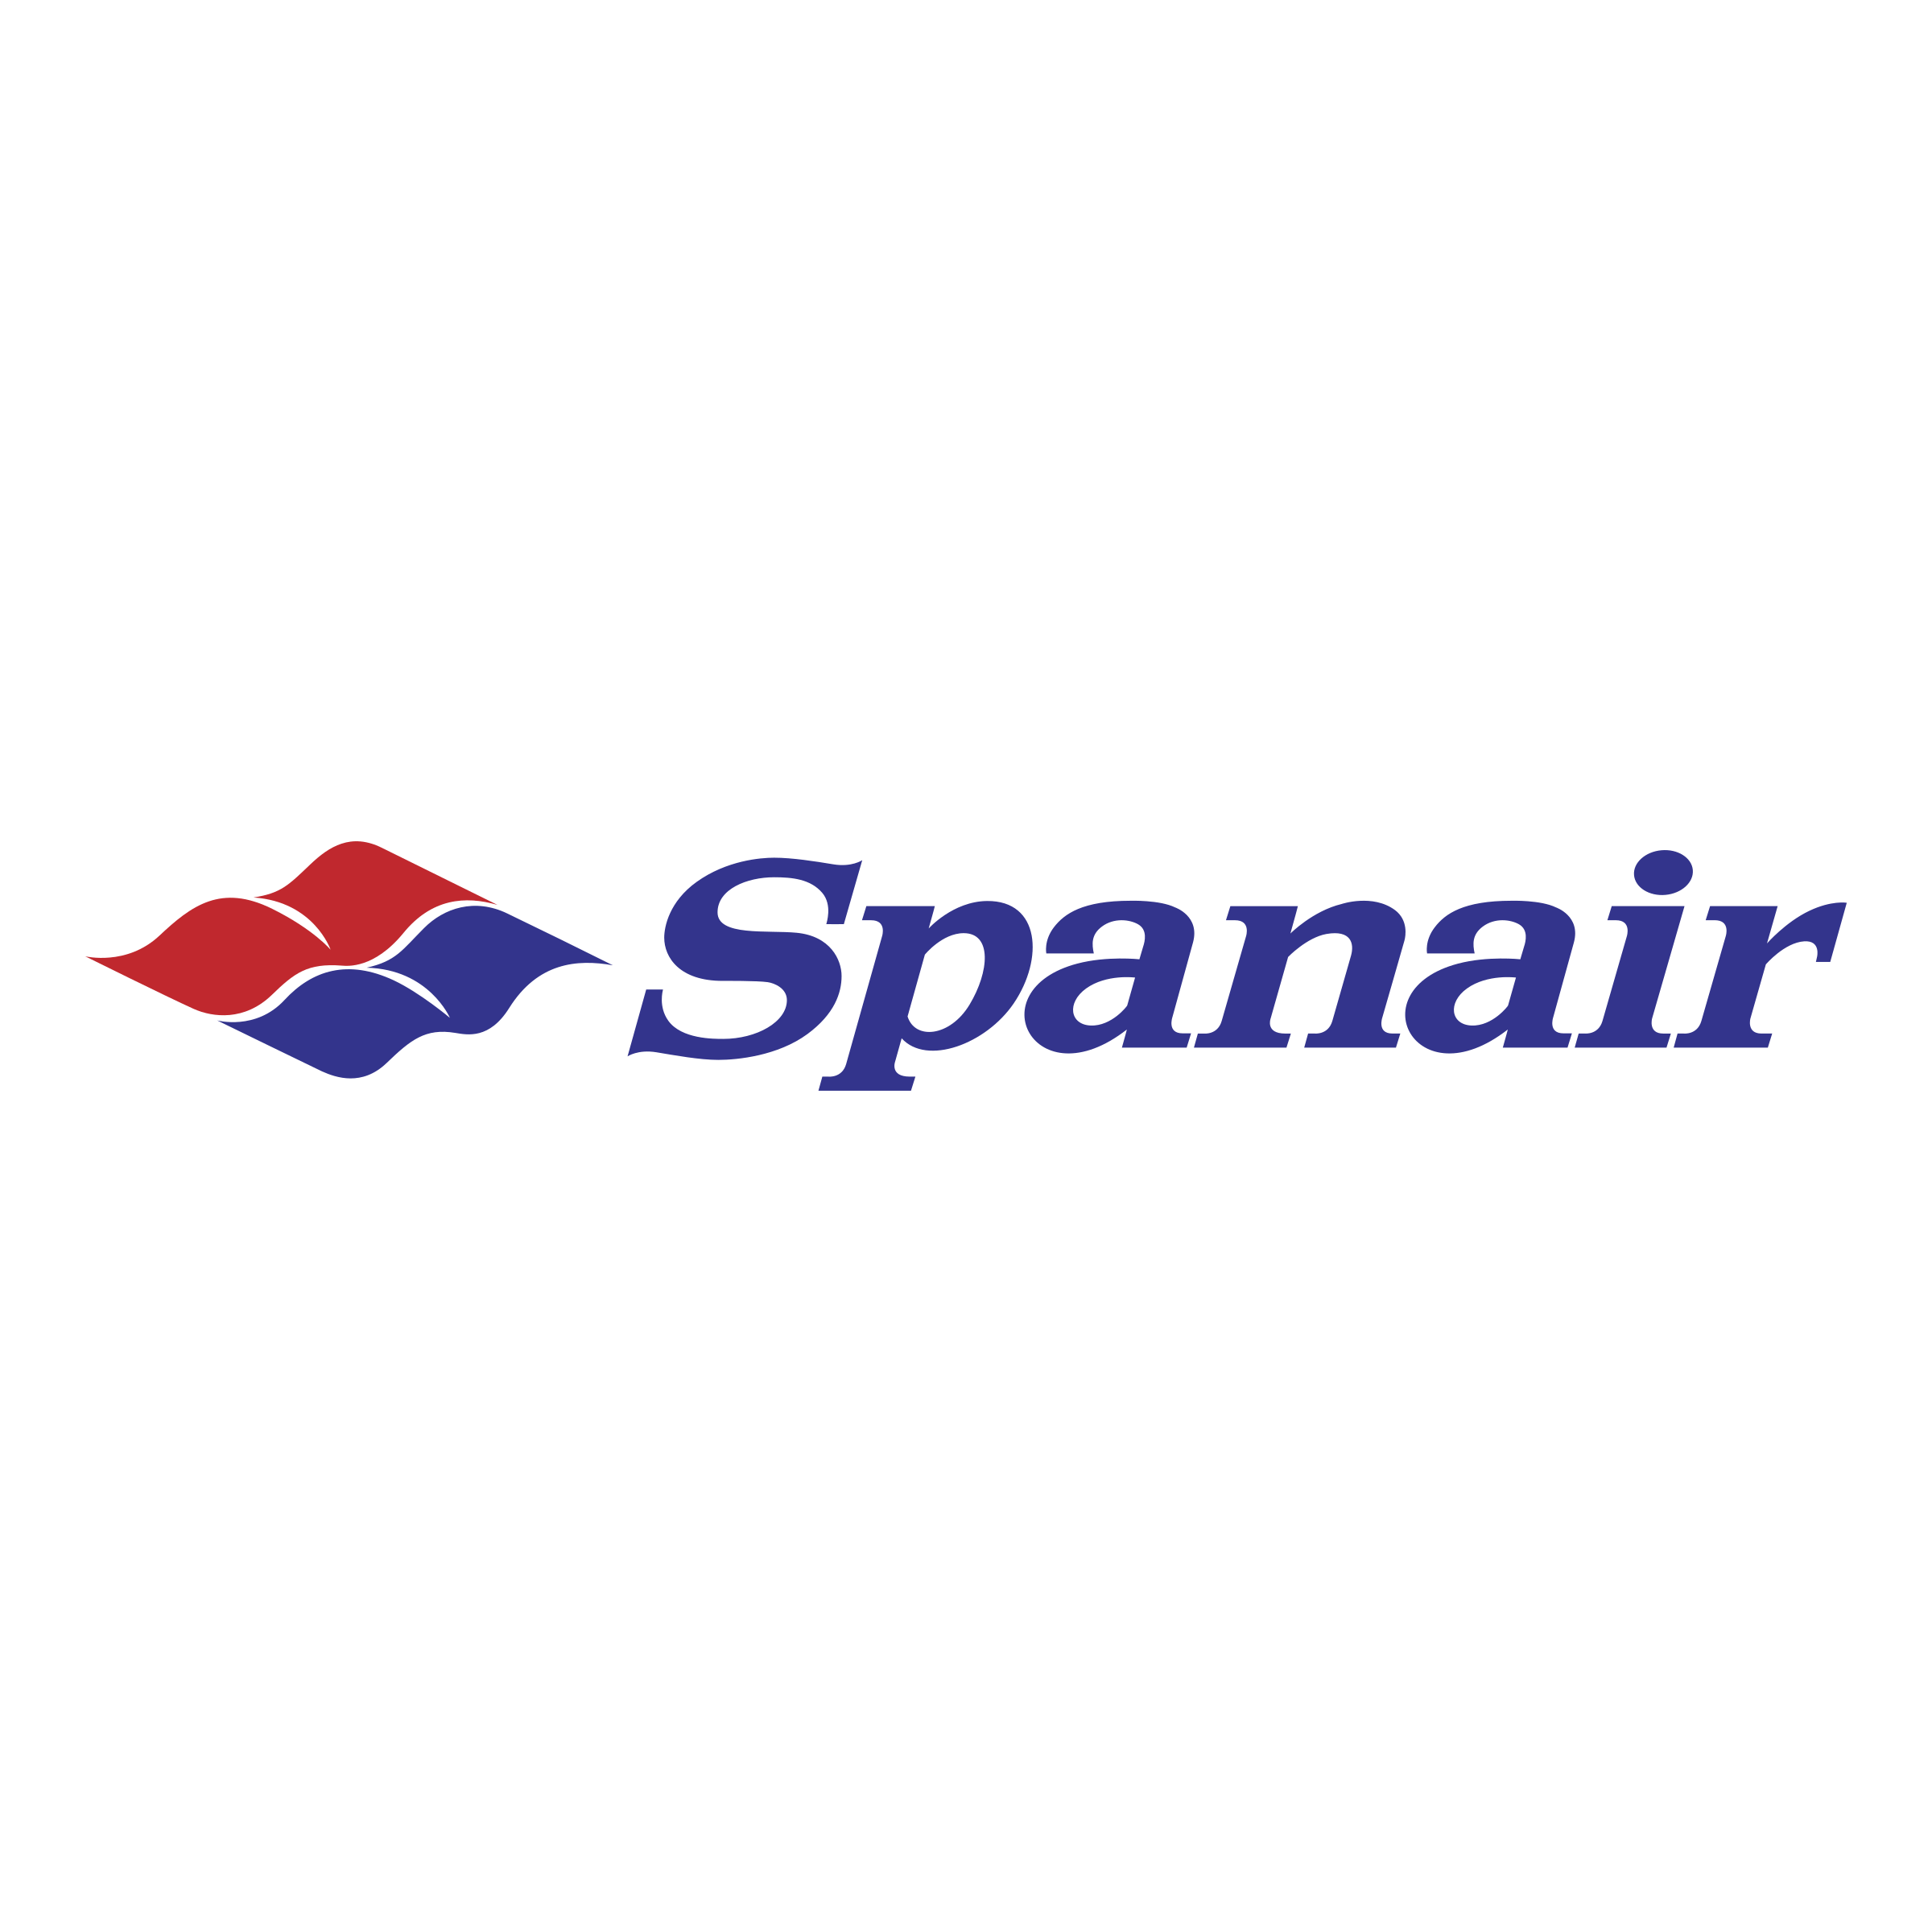 Spanair Logo - Spanair Logo PNG Transparent & SVG Vector